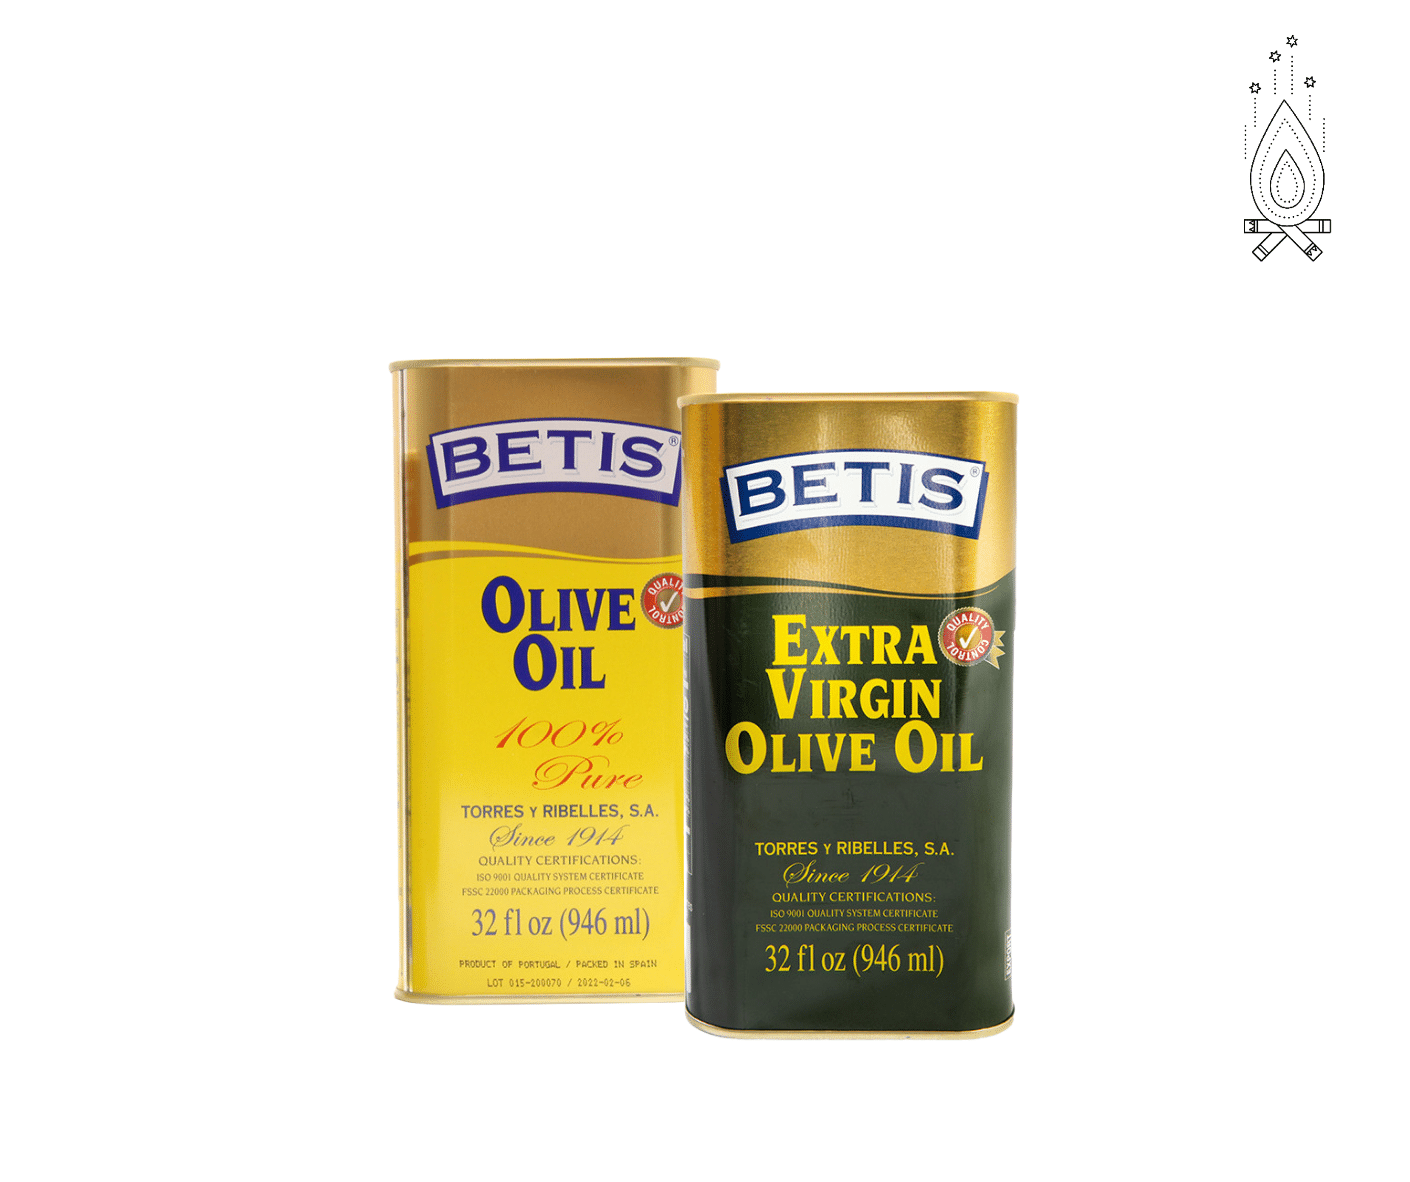 Betis olivolja action | Olivolja & extra jungfruolja 946 ml